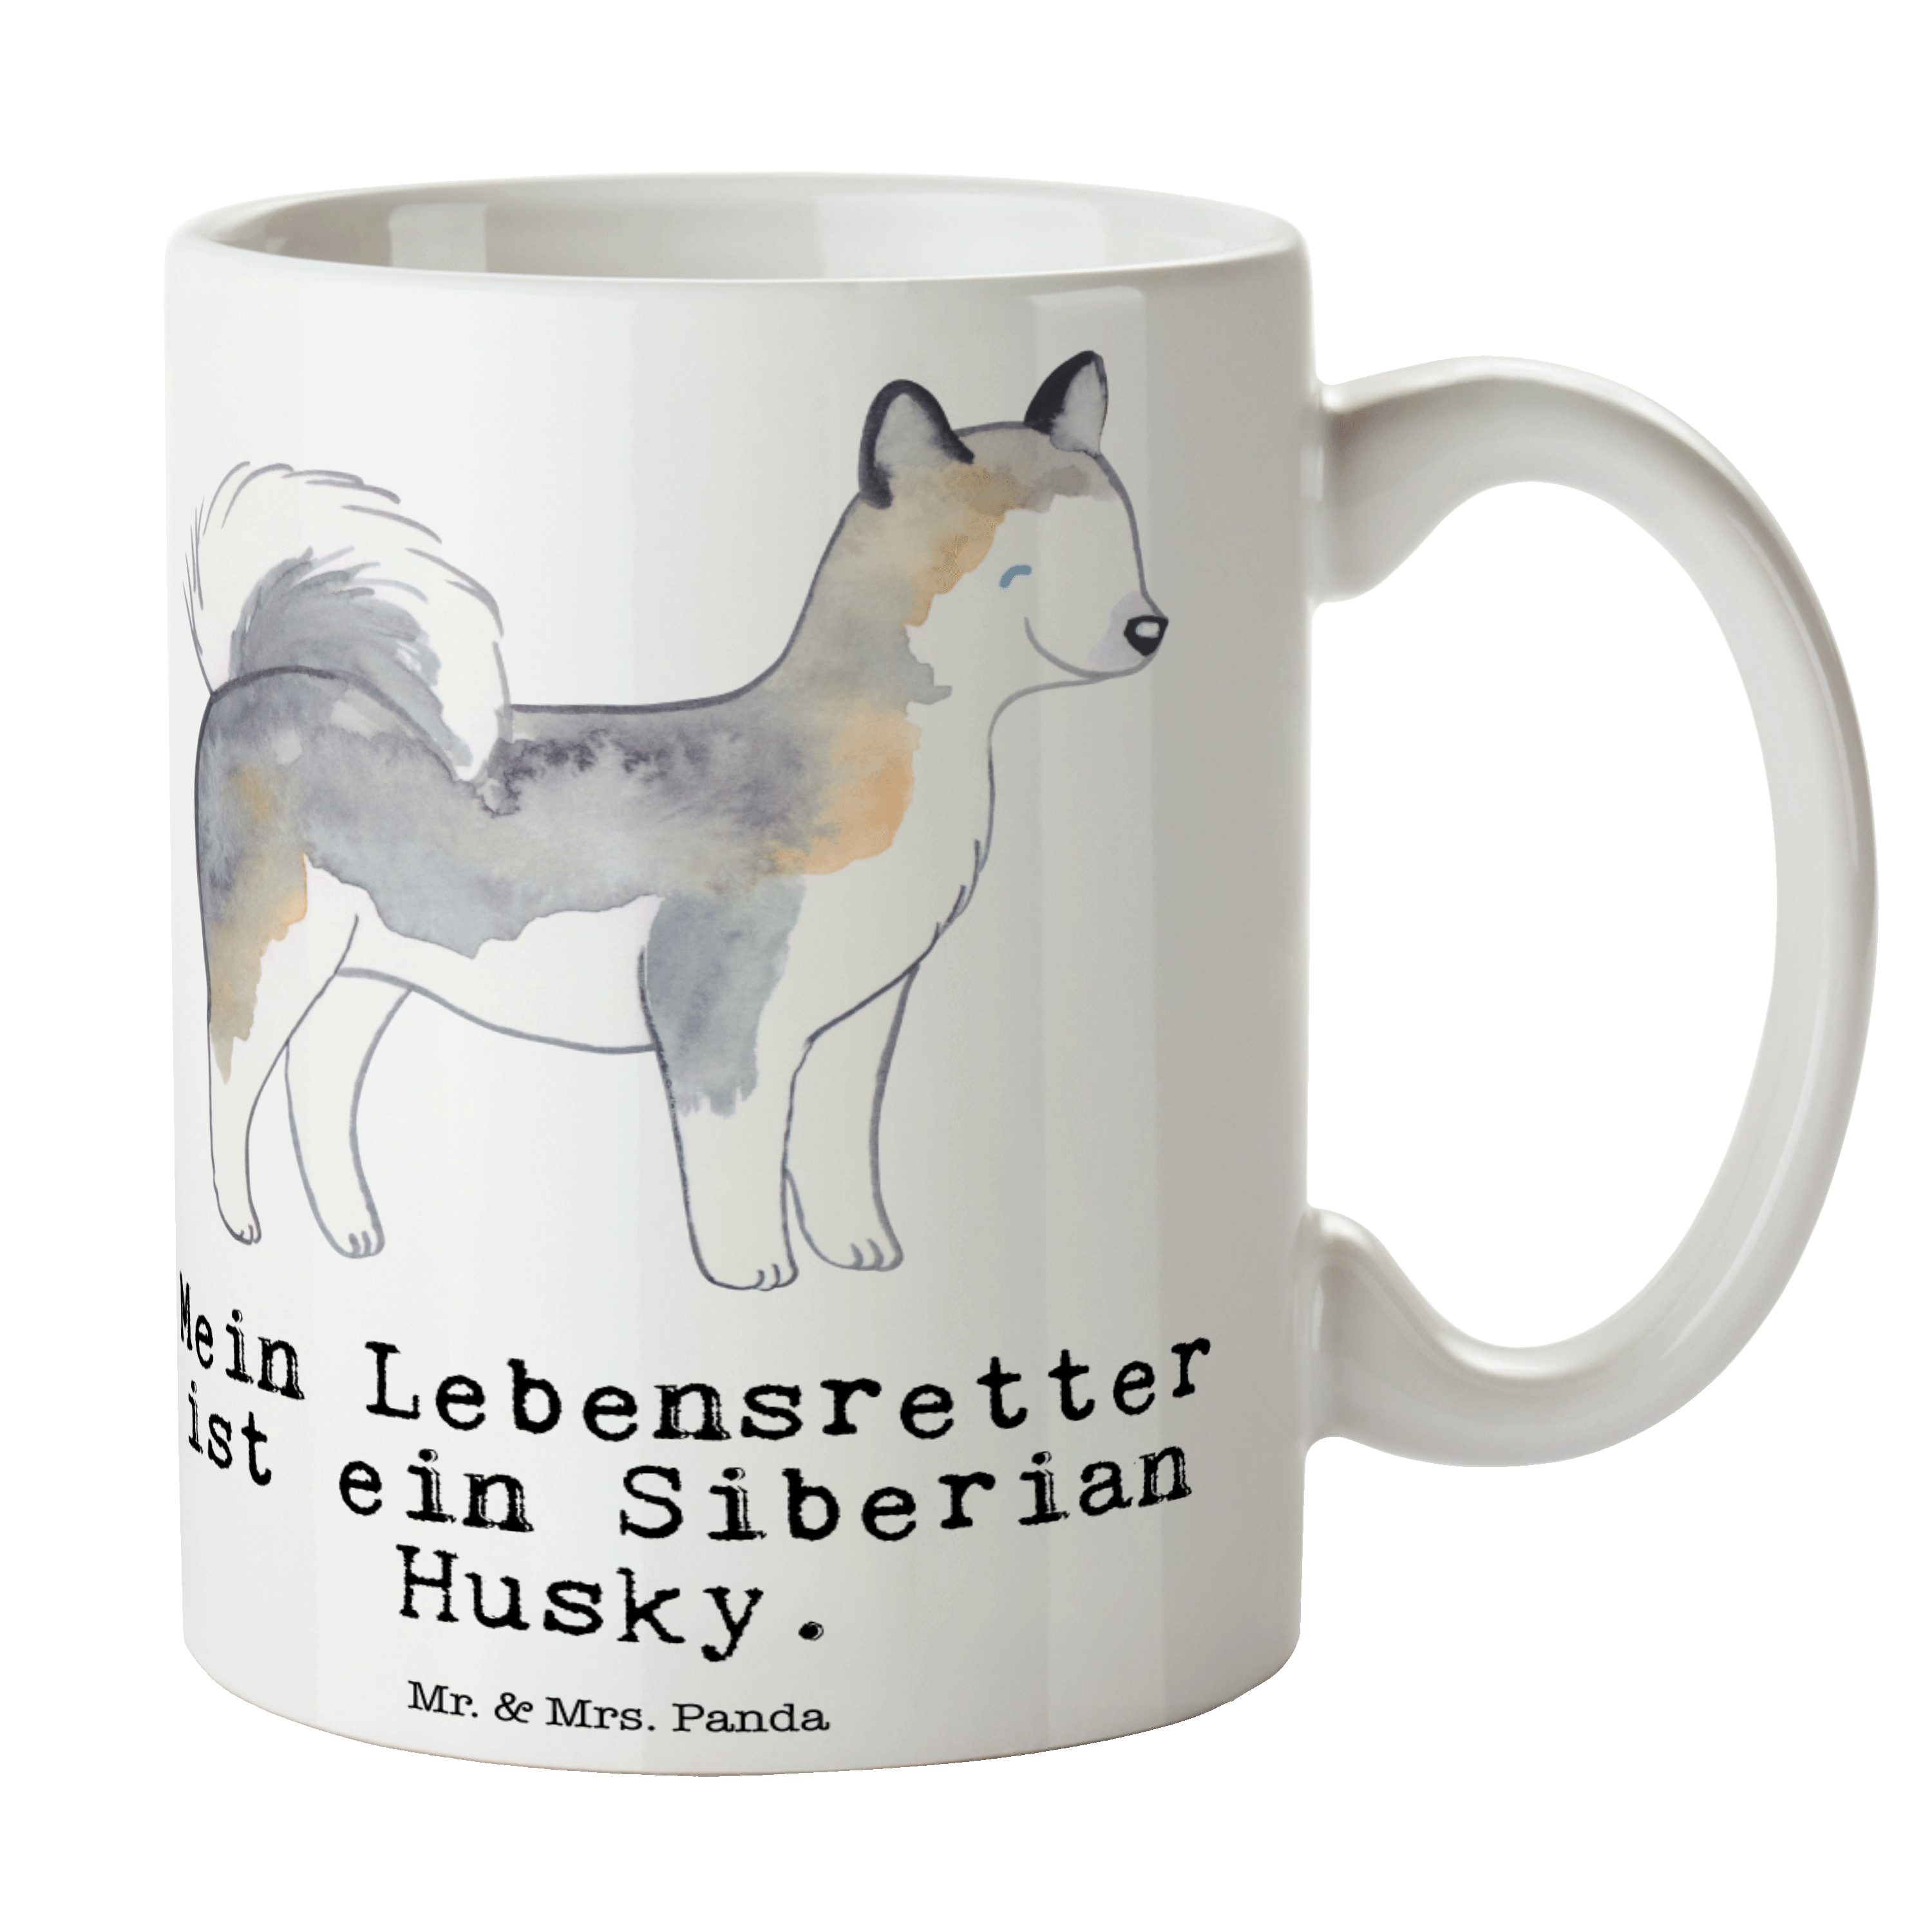 Mr. & Mrs. Panda Tasse Siberian Husky Lebensretter - Weiß - Geschenk, Tasse Motive, Kaffeebe, Keramik